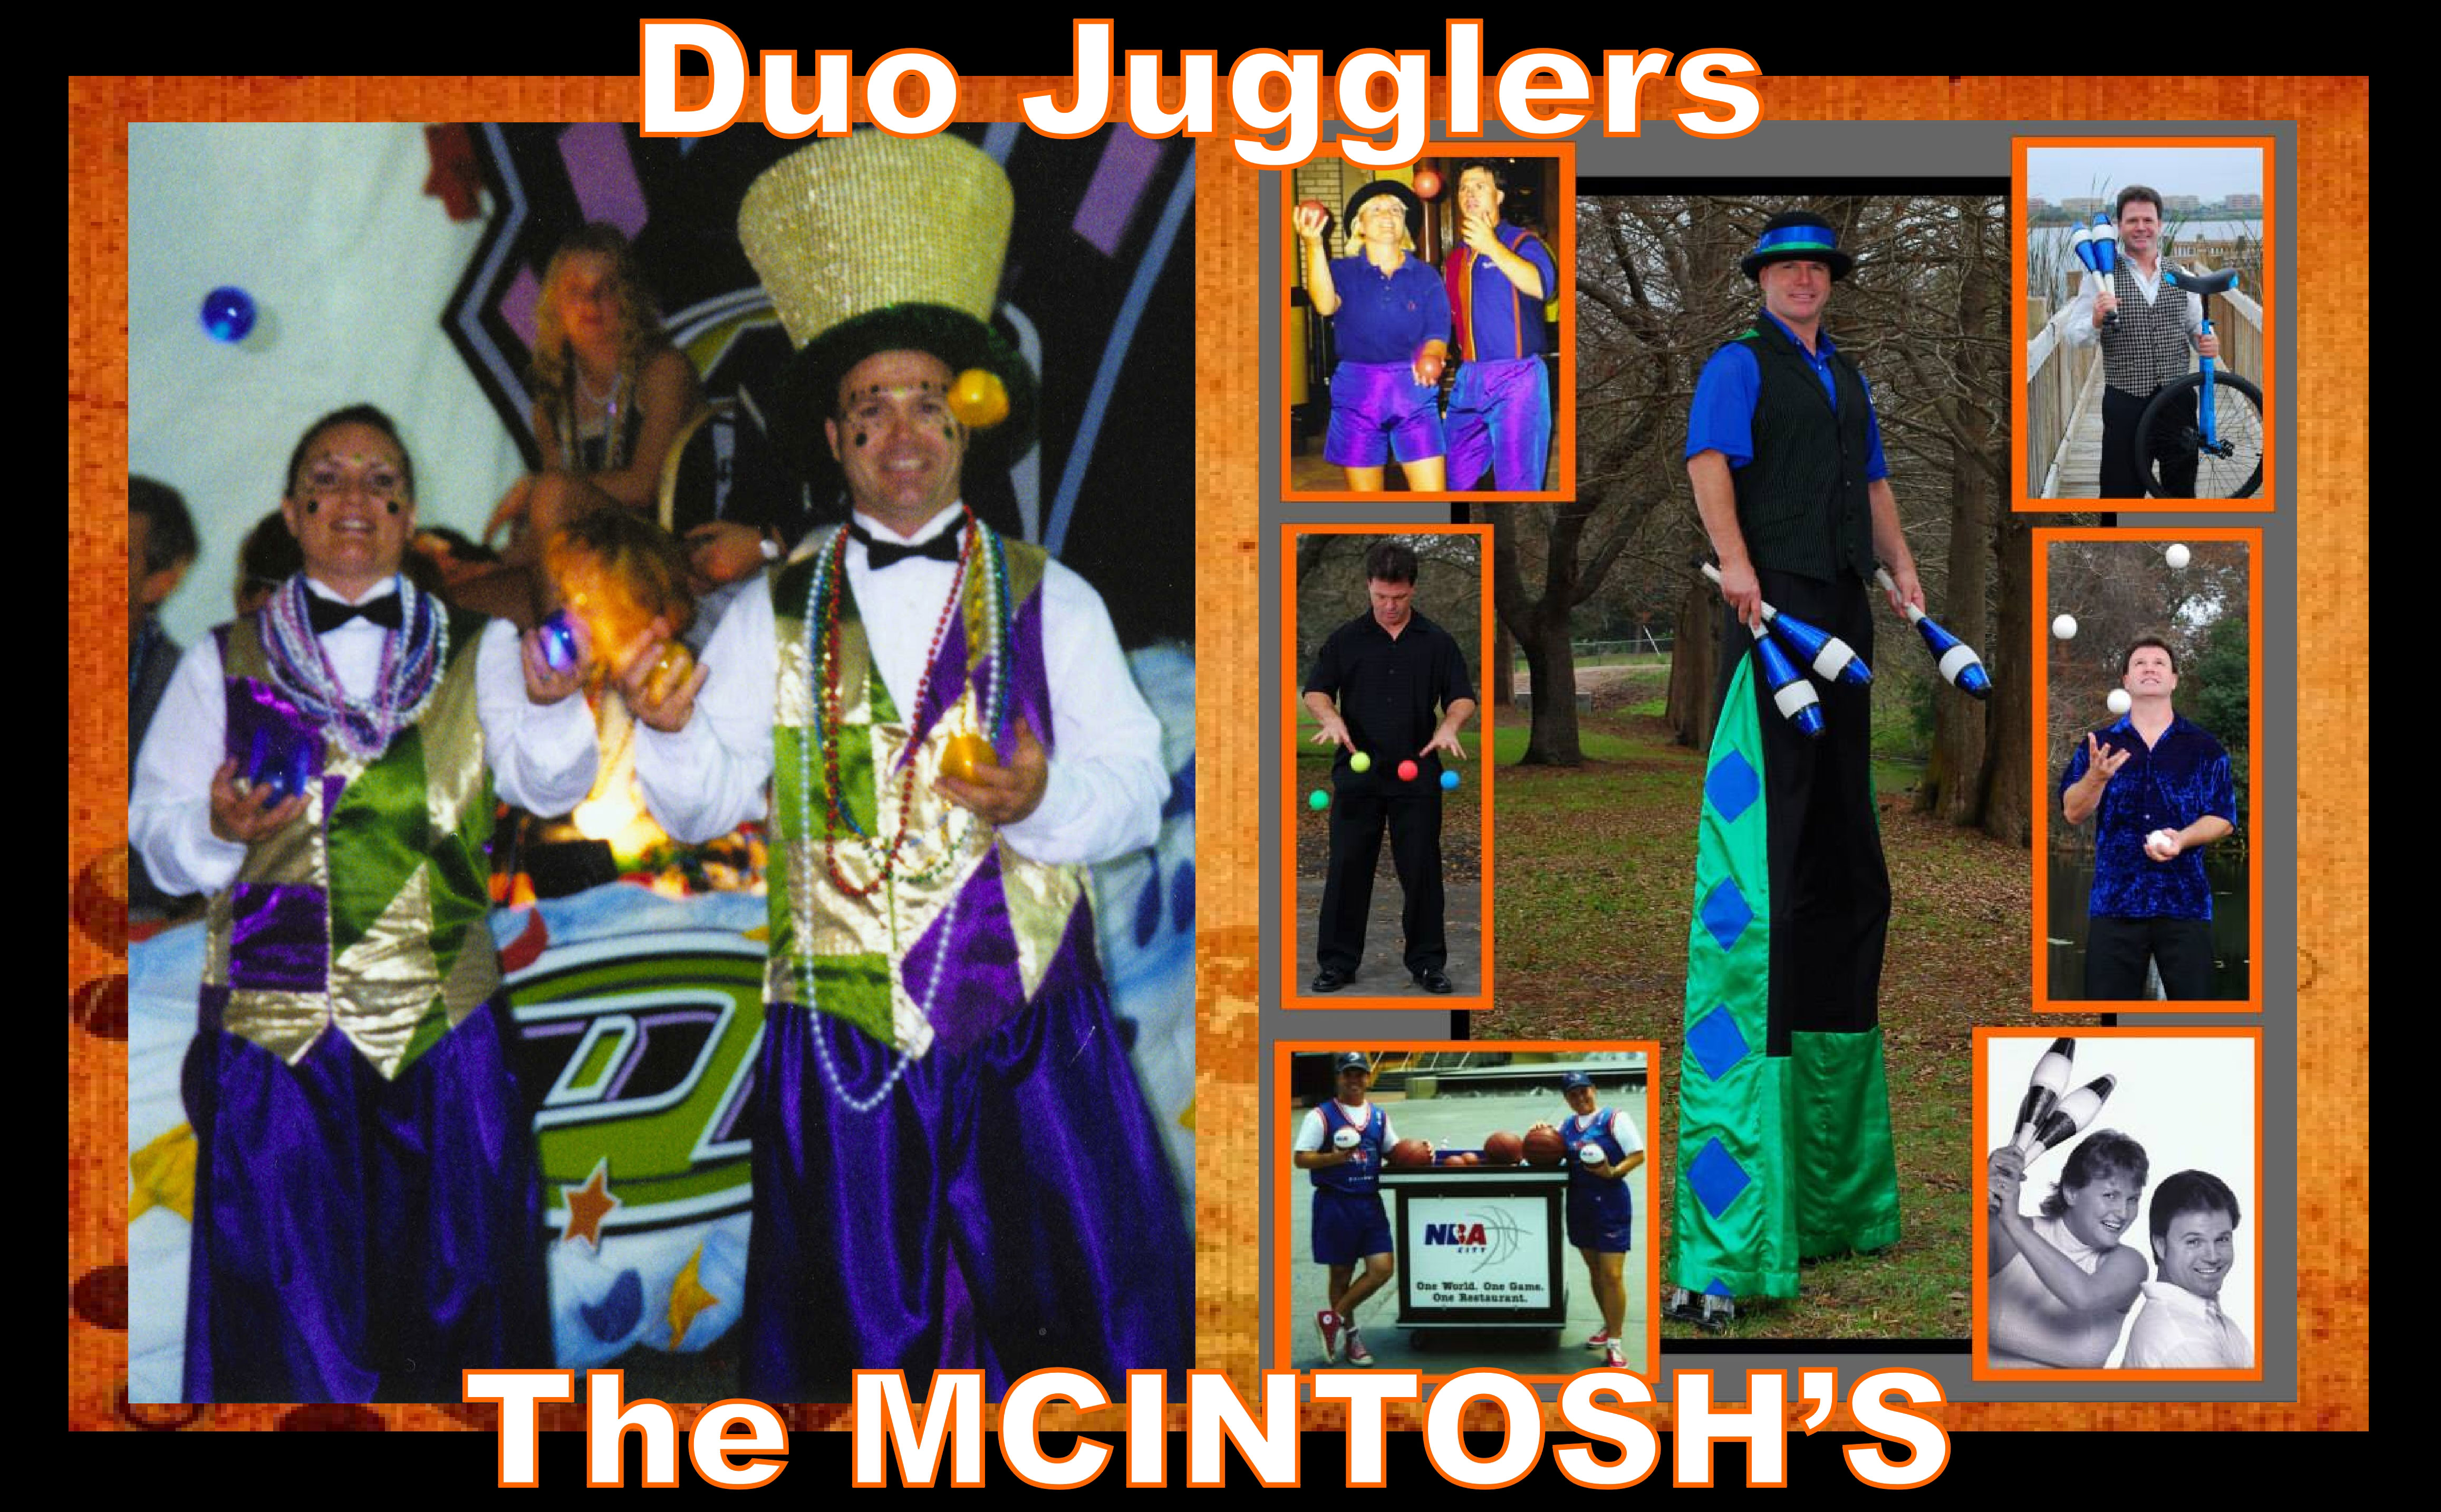 The MCINTOSH'S -Comedian Jugglers. Pleasure Island at Downtown Disney, NBA City@CityWalk Universal Studios, Church Street Staion Downtown Orlando, FL